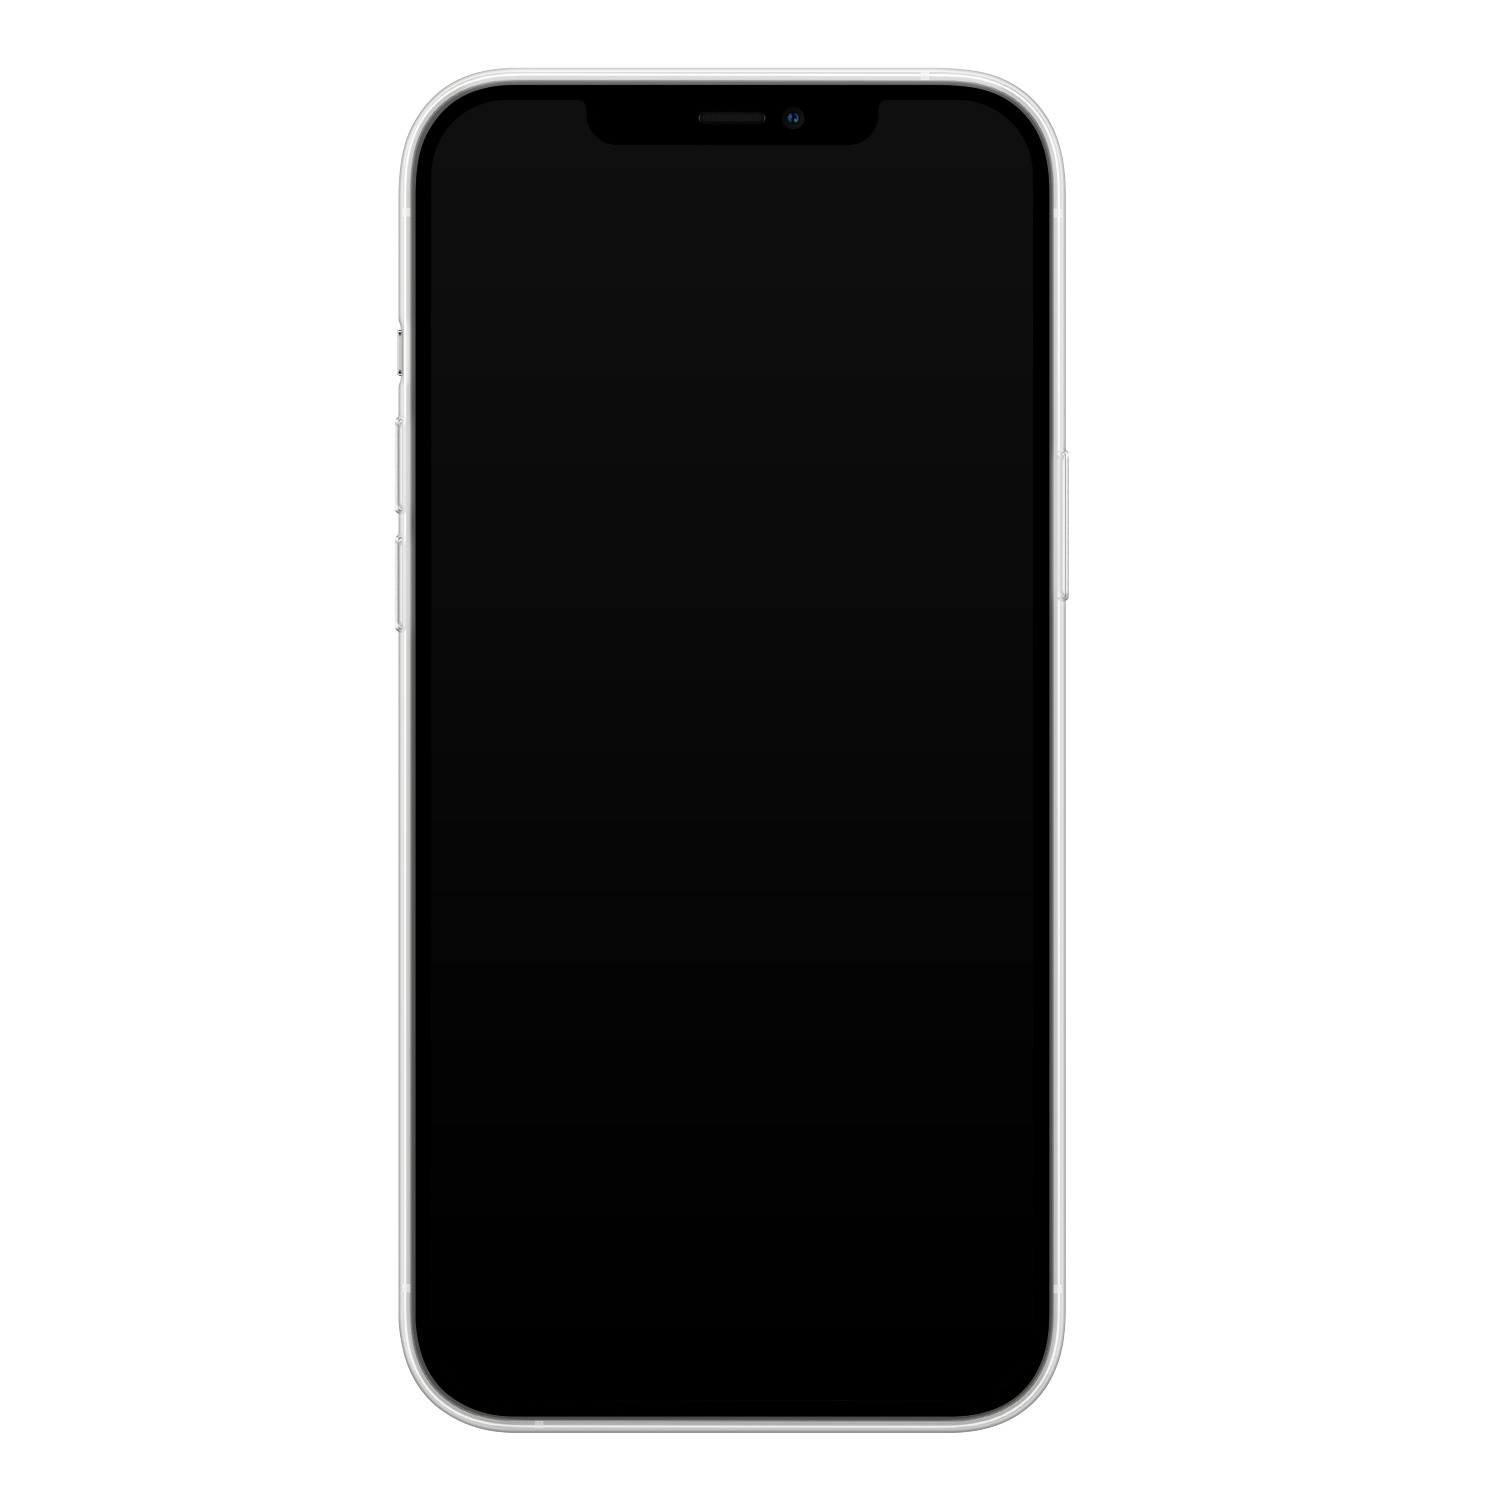 Leuke Telefoonhoesjes iPhone 12 Pro Max siliconen hoesje - Goud blauw marmer